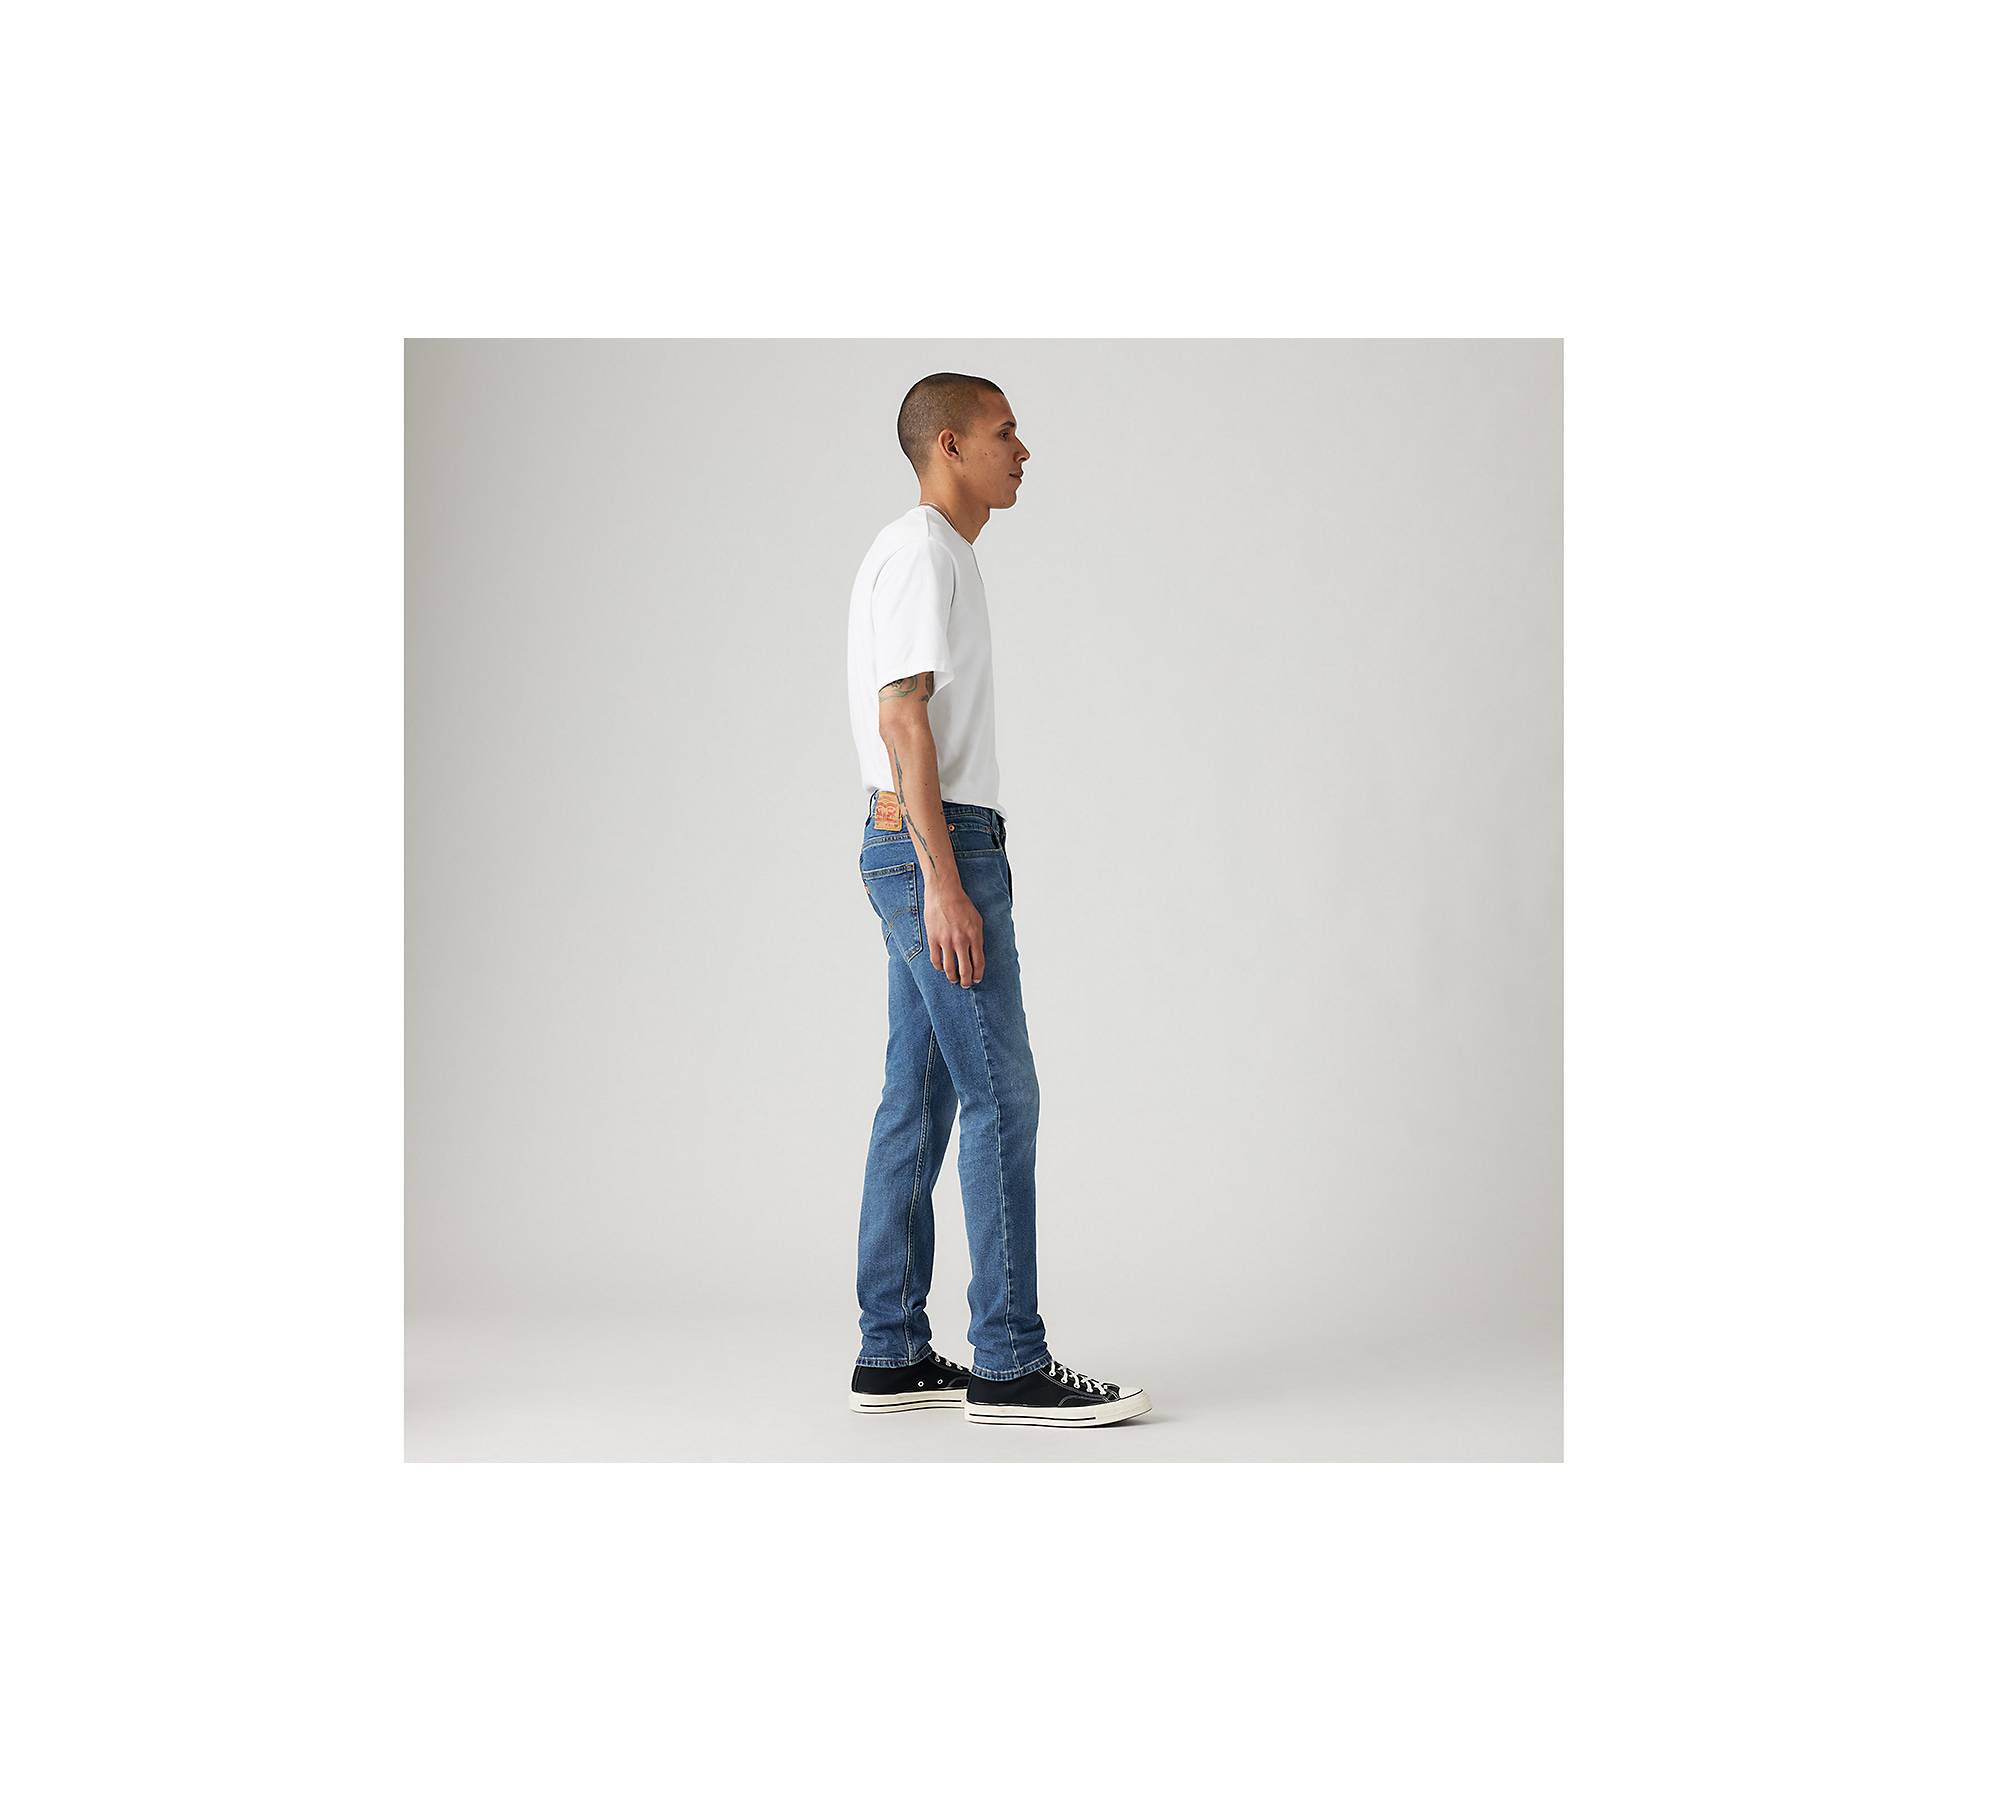 512™ Slim Taper Fit Men's Jeans - Blue